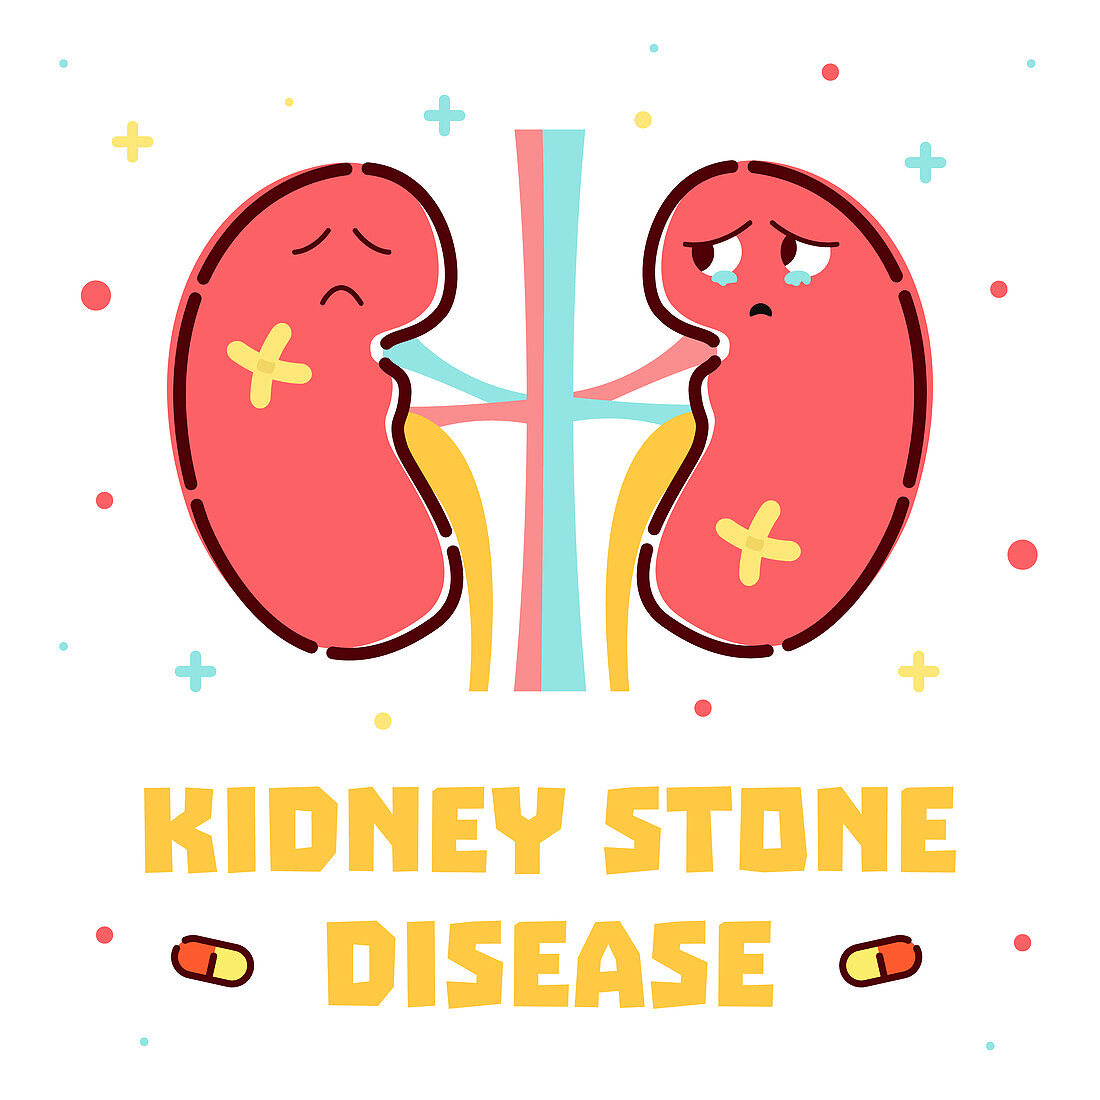 Kidney stone disease, conceptual illustration